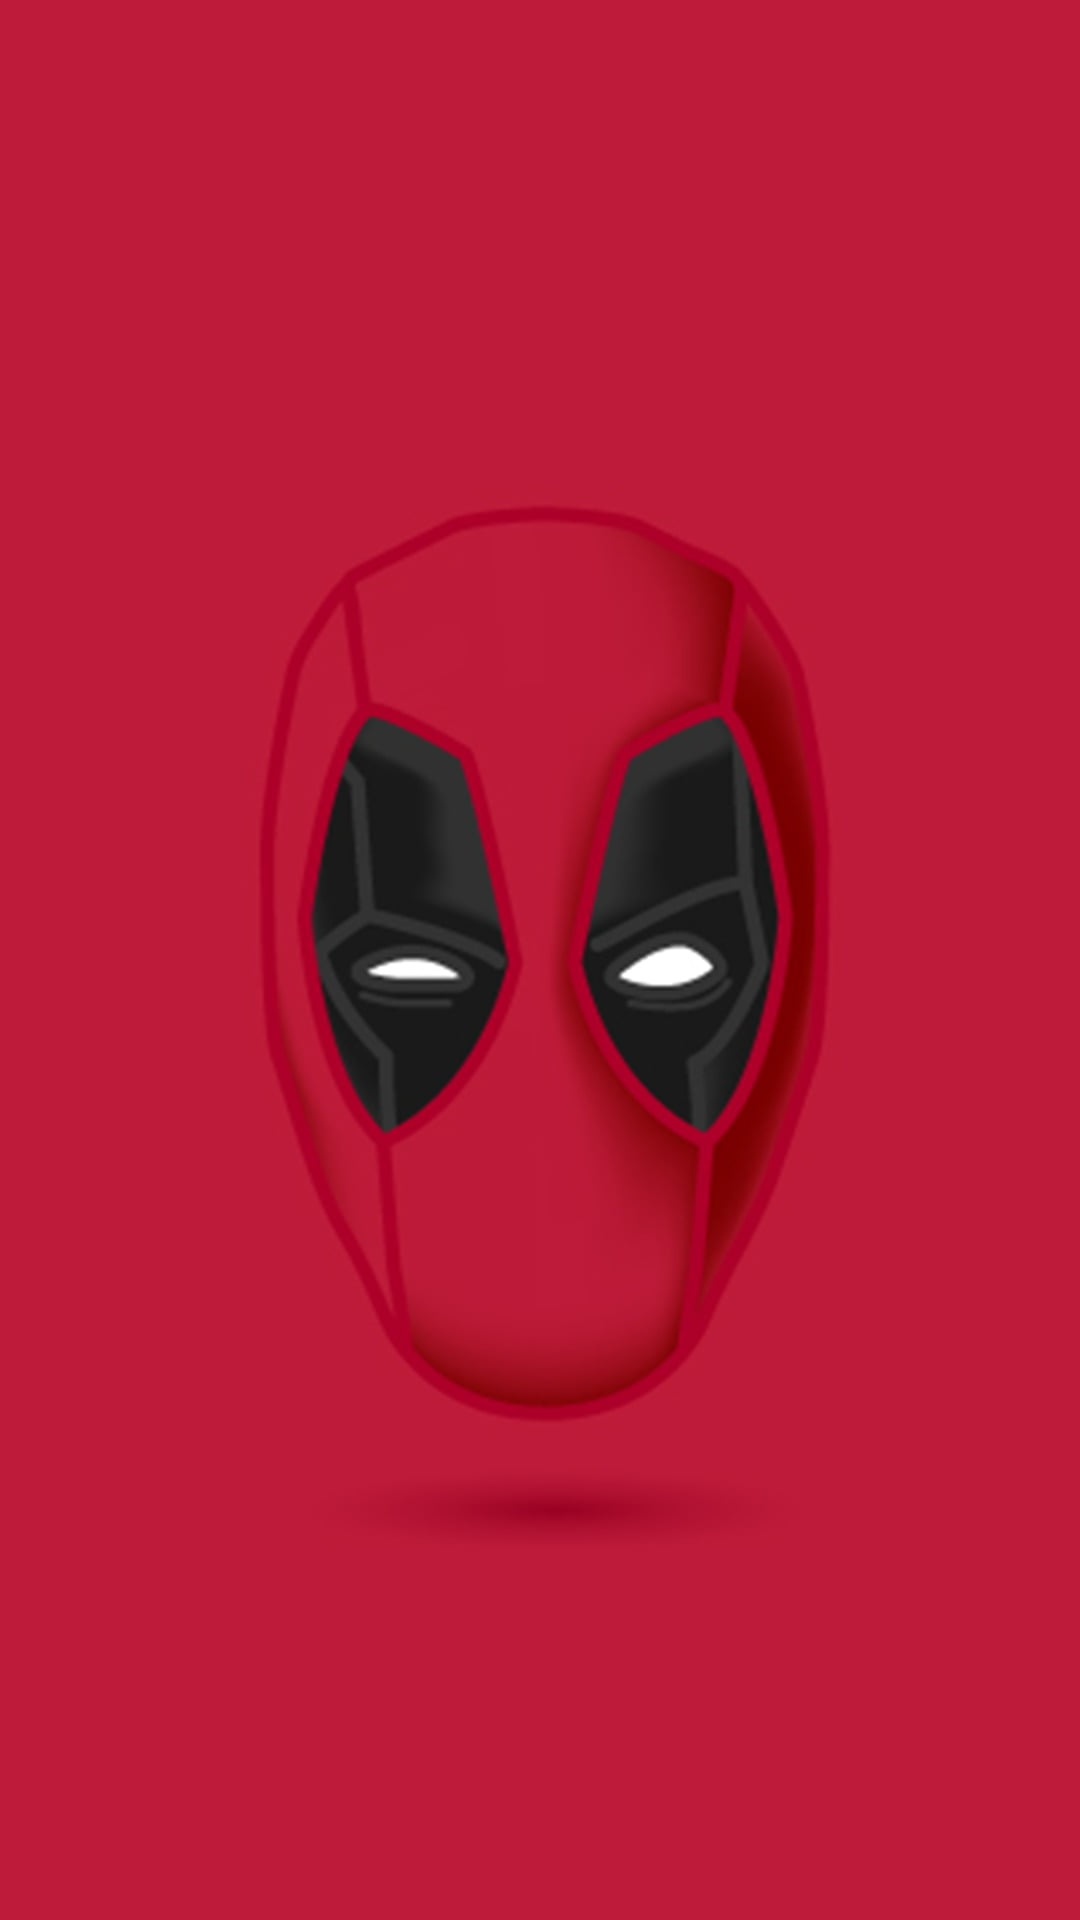 Deadpool digital wallpaper, superhero, studio shot, red, colored background